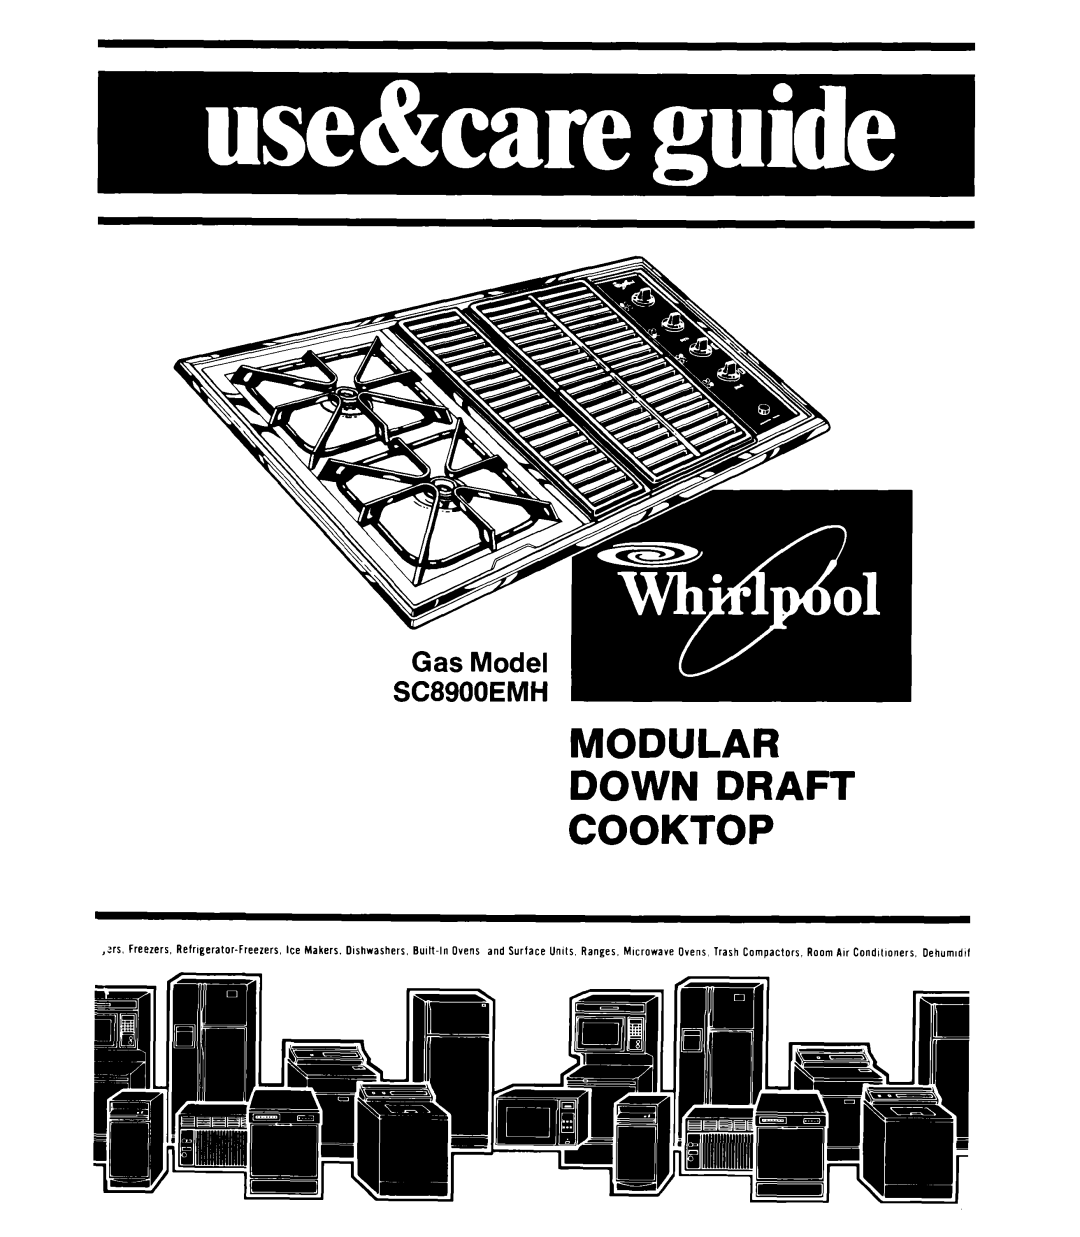 Whirlpool manual Modular Down Draft Cooktop, Gas Model SC8900EMH 